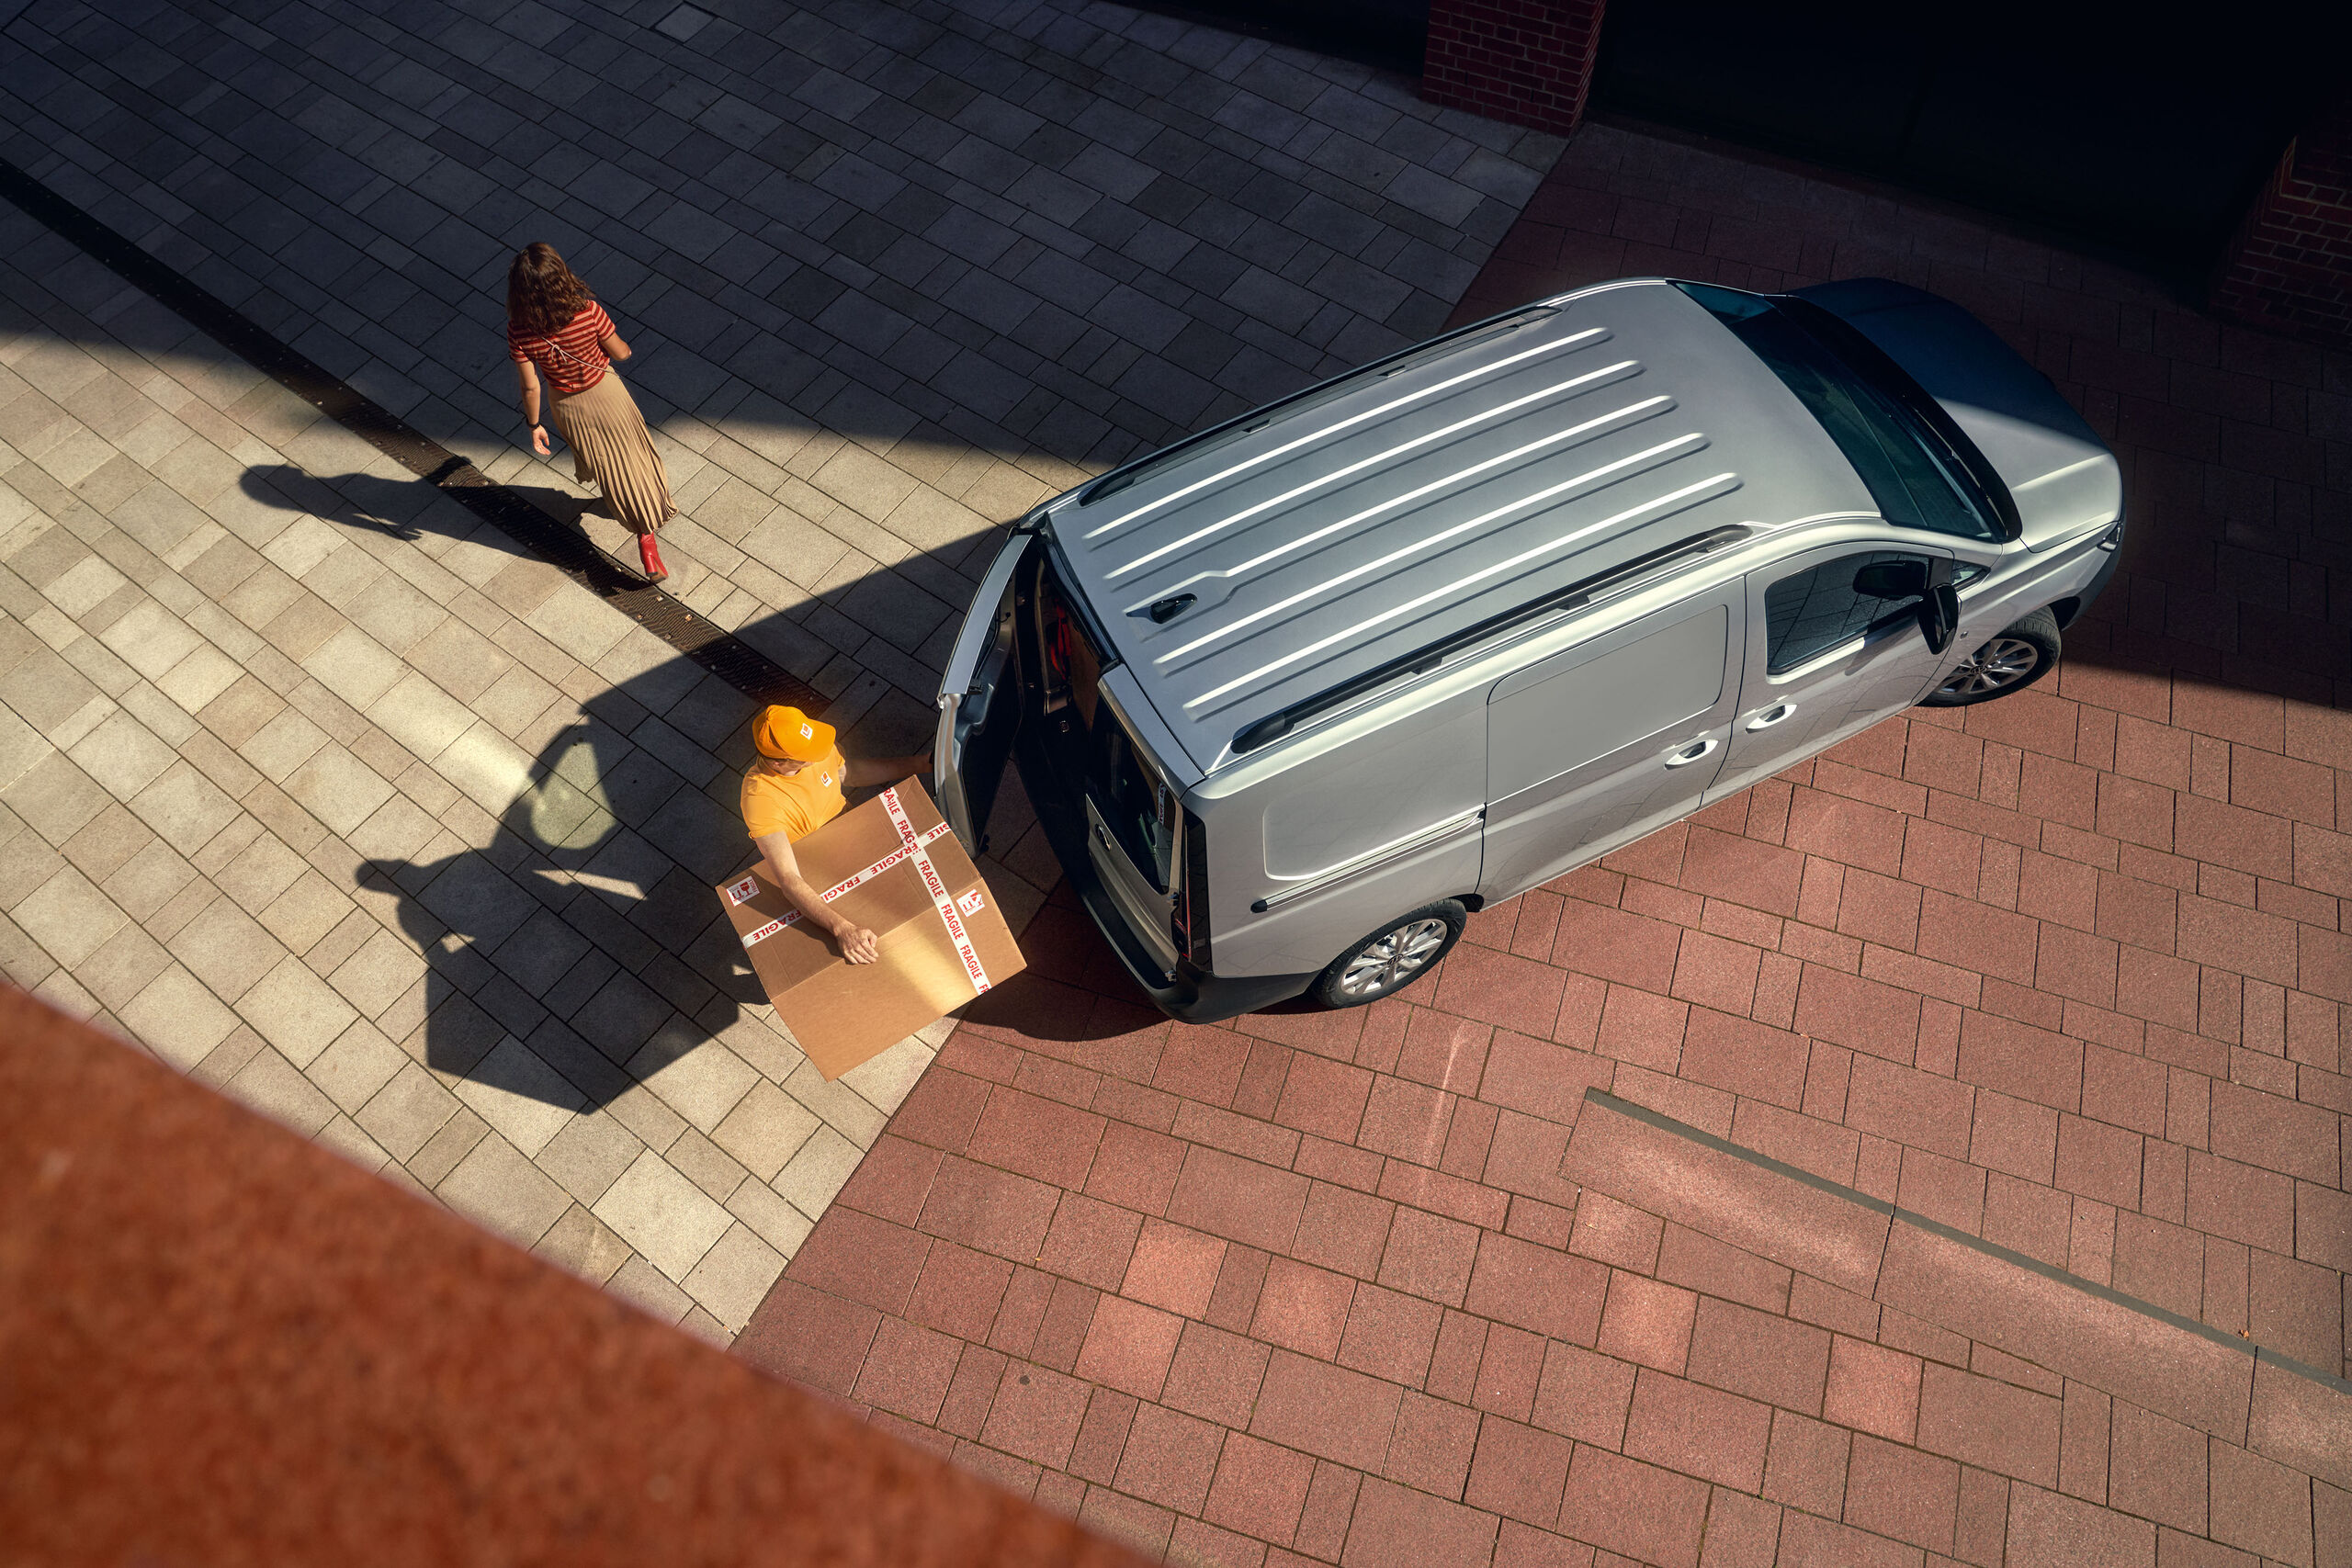 Perspetiva lateral do novo Volkswagen Caddy Cargo com a porta lateral aberta.